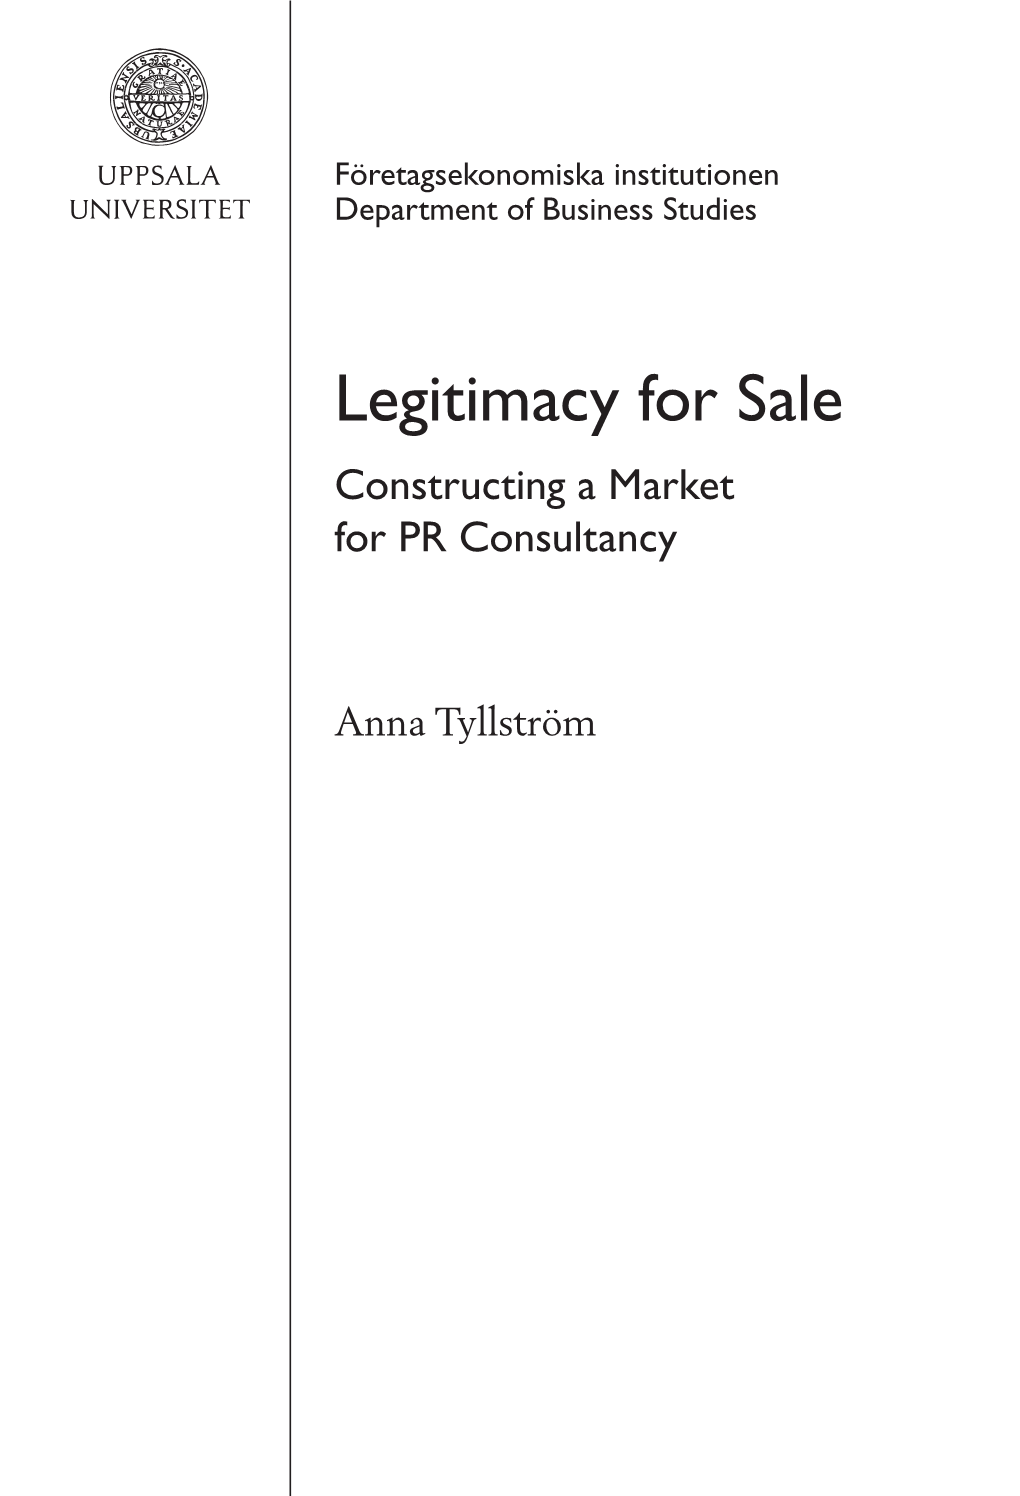 Legitimacy for Sale: Constructing a Market for PR Consultancy